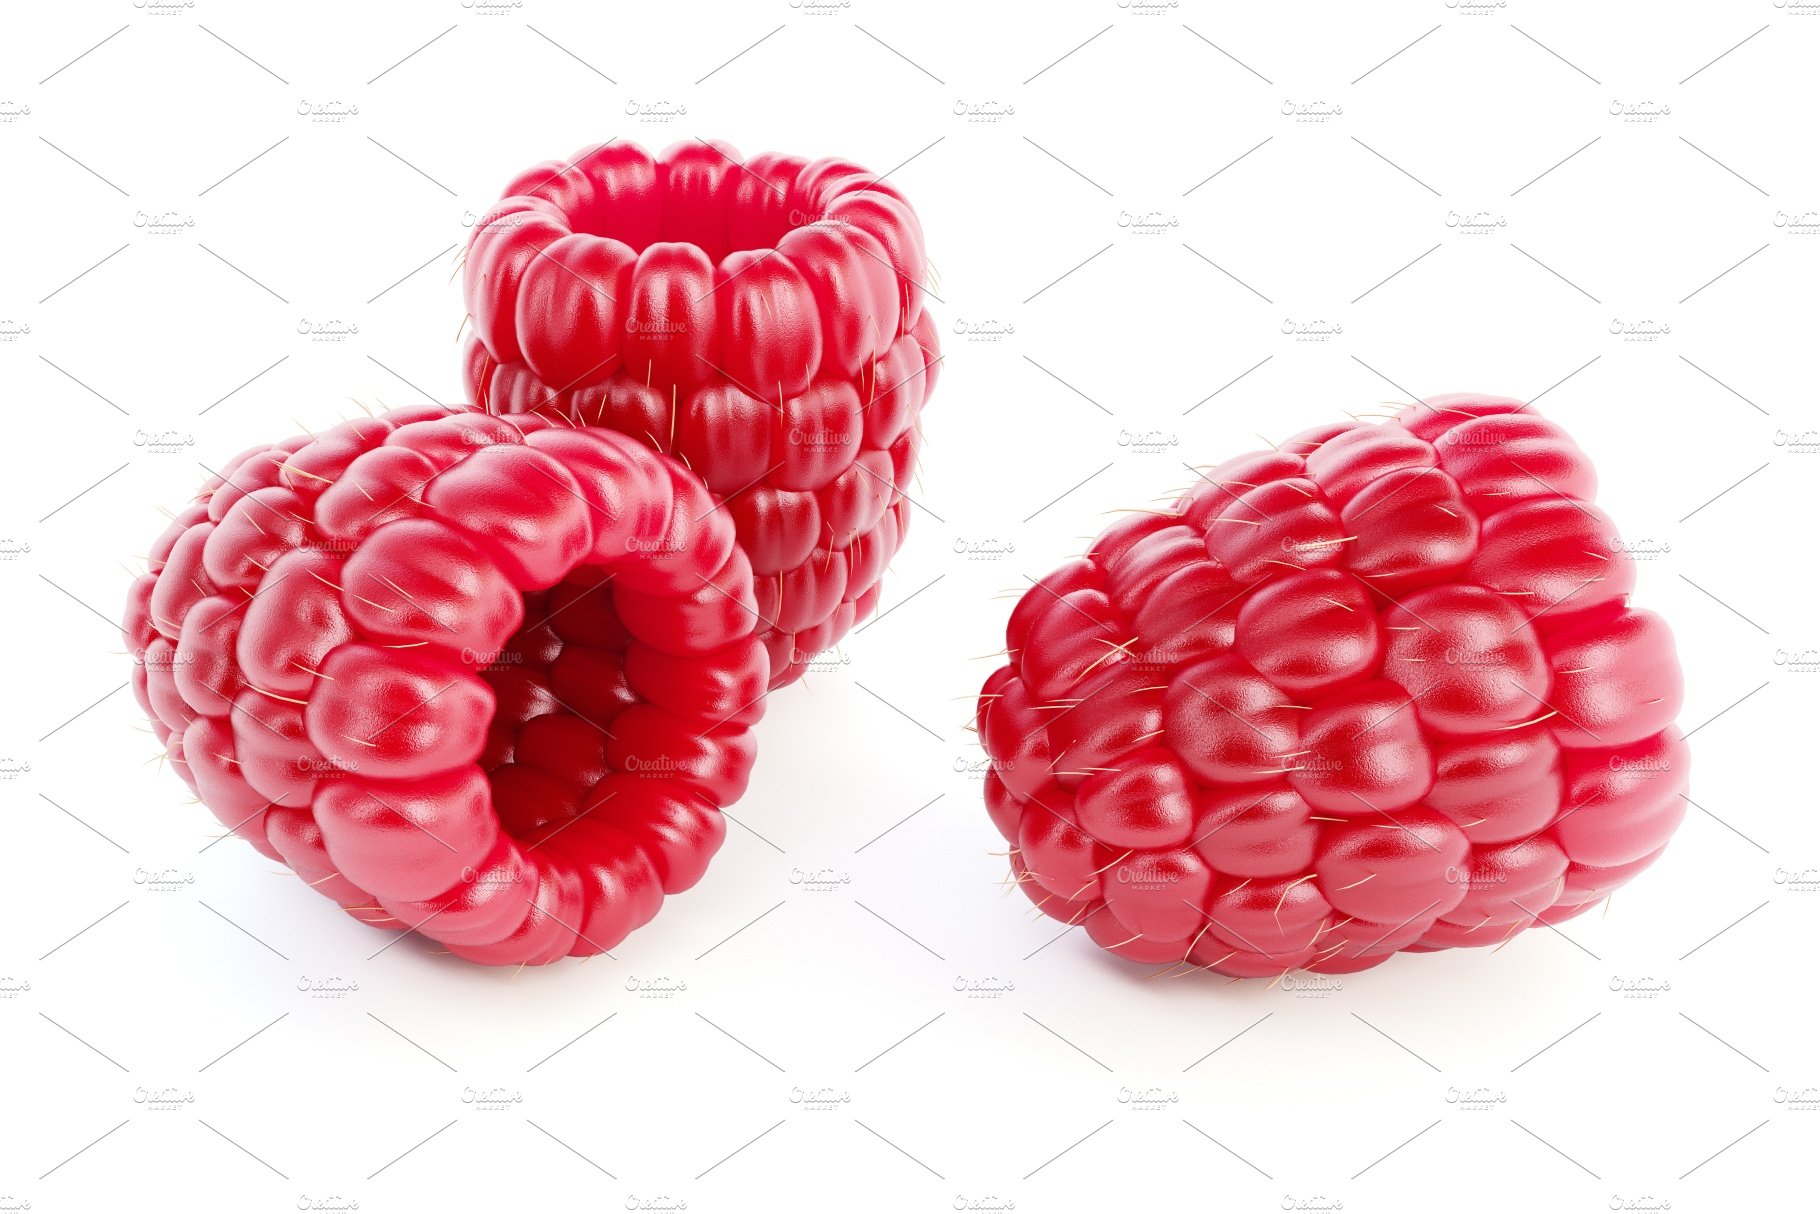 Ripe raspberry berries raster cover image.